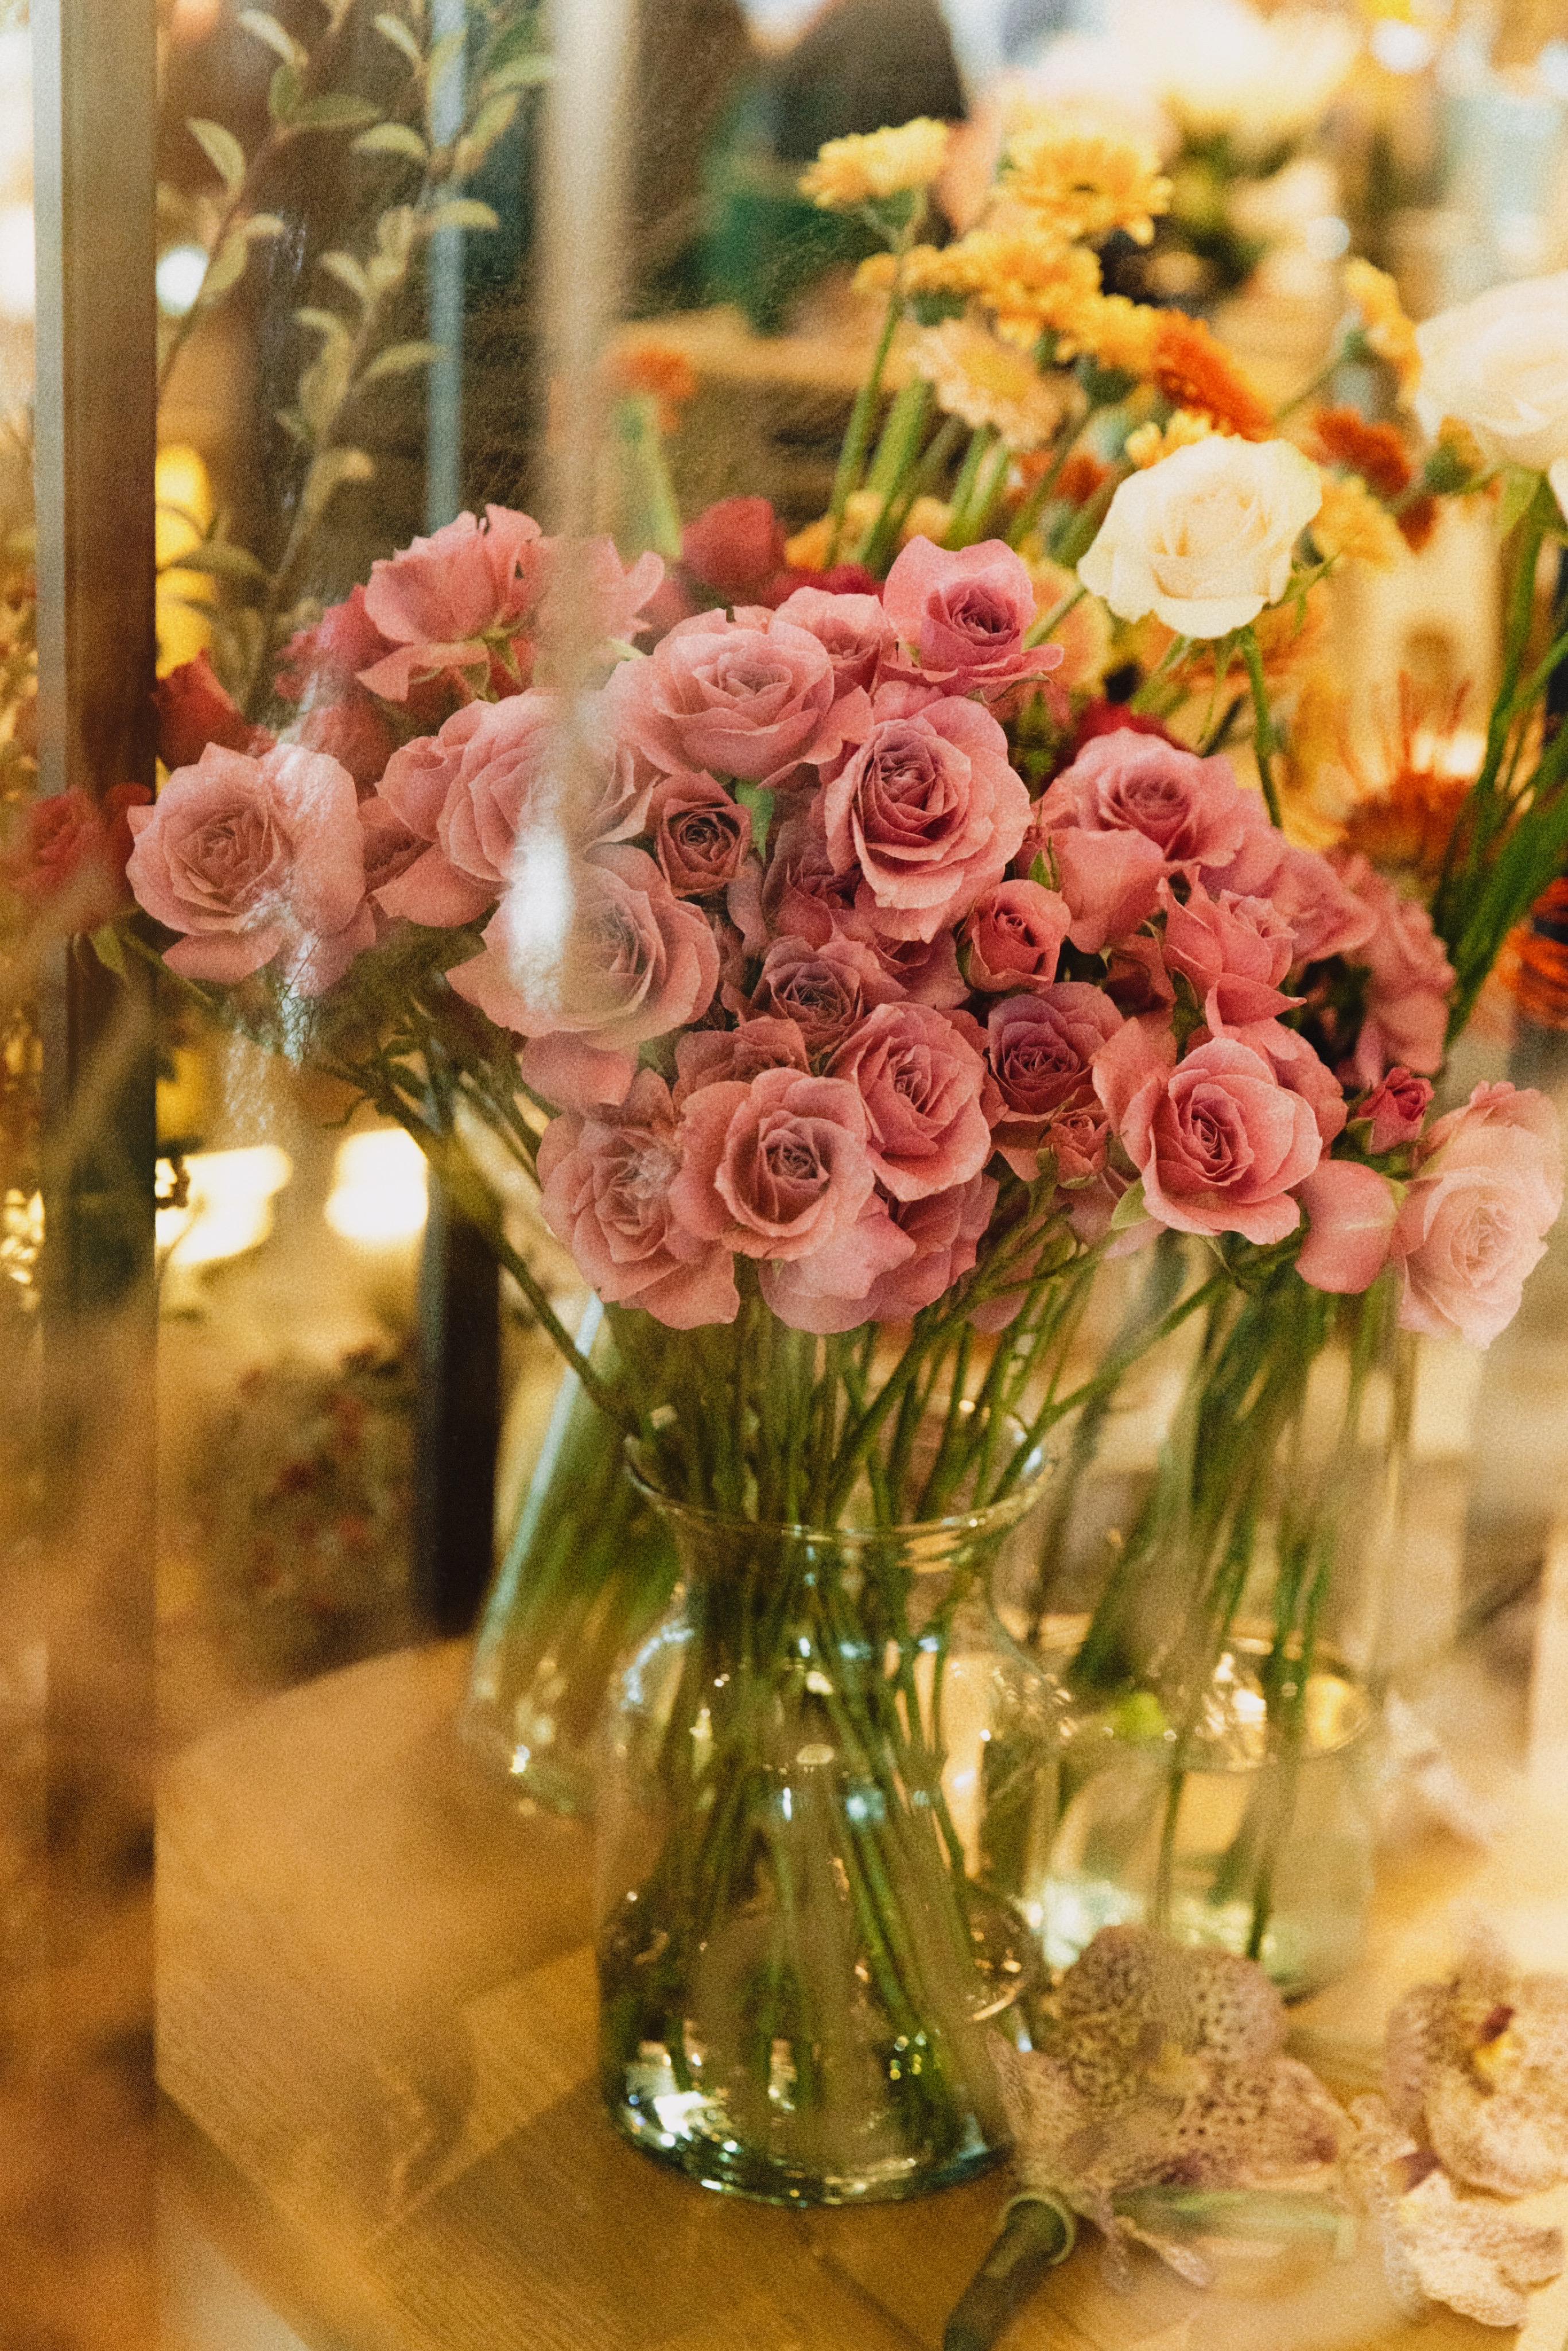 Images The Flower Shop